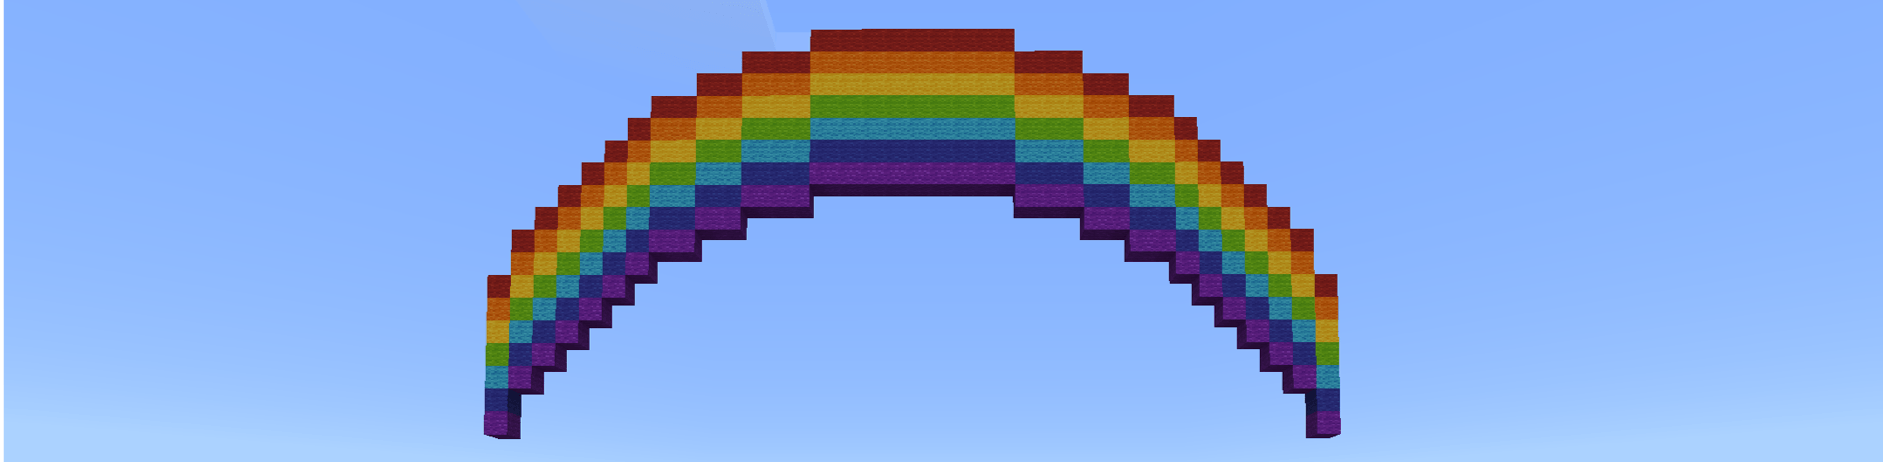 RAINBOW Minecraft Logo - Minecraft Coding: Code a Rainbow